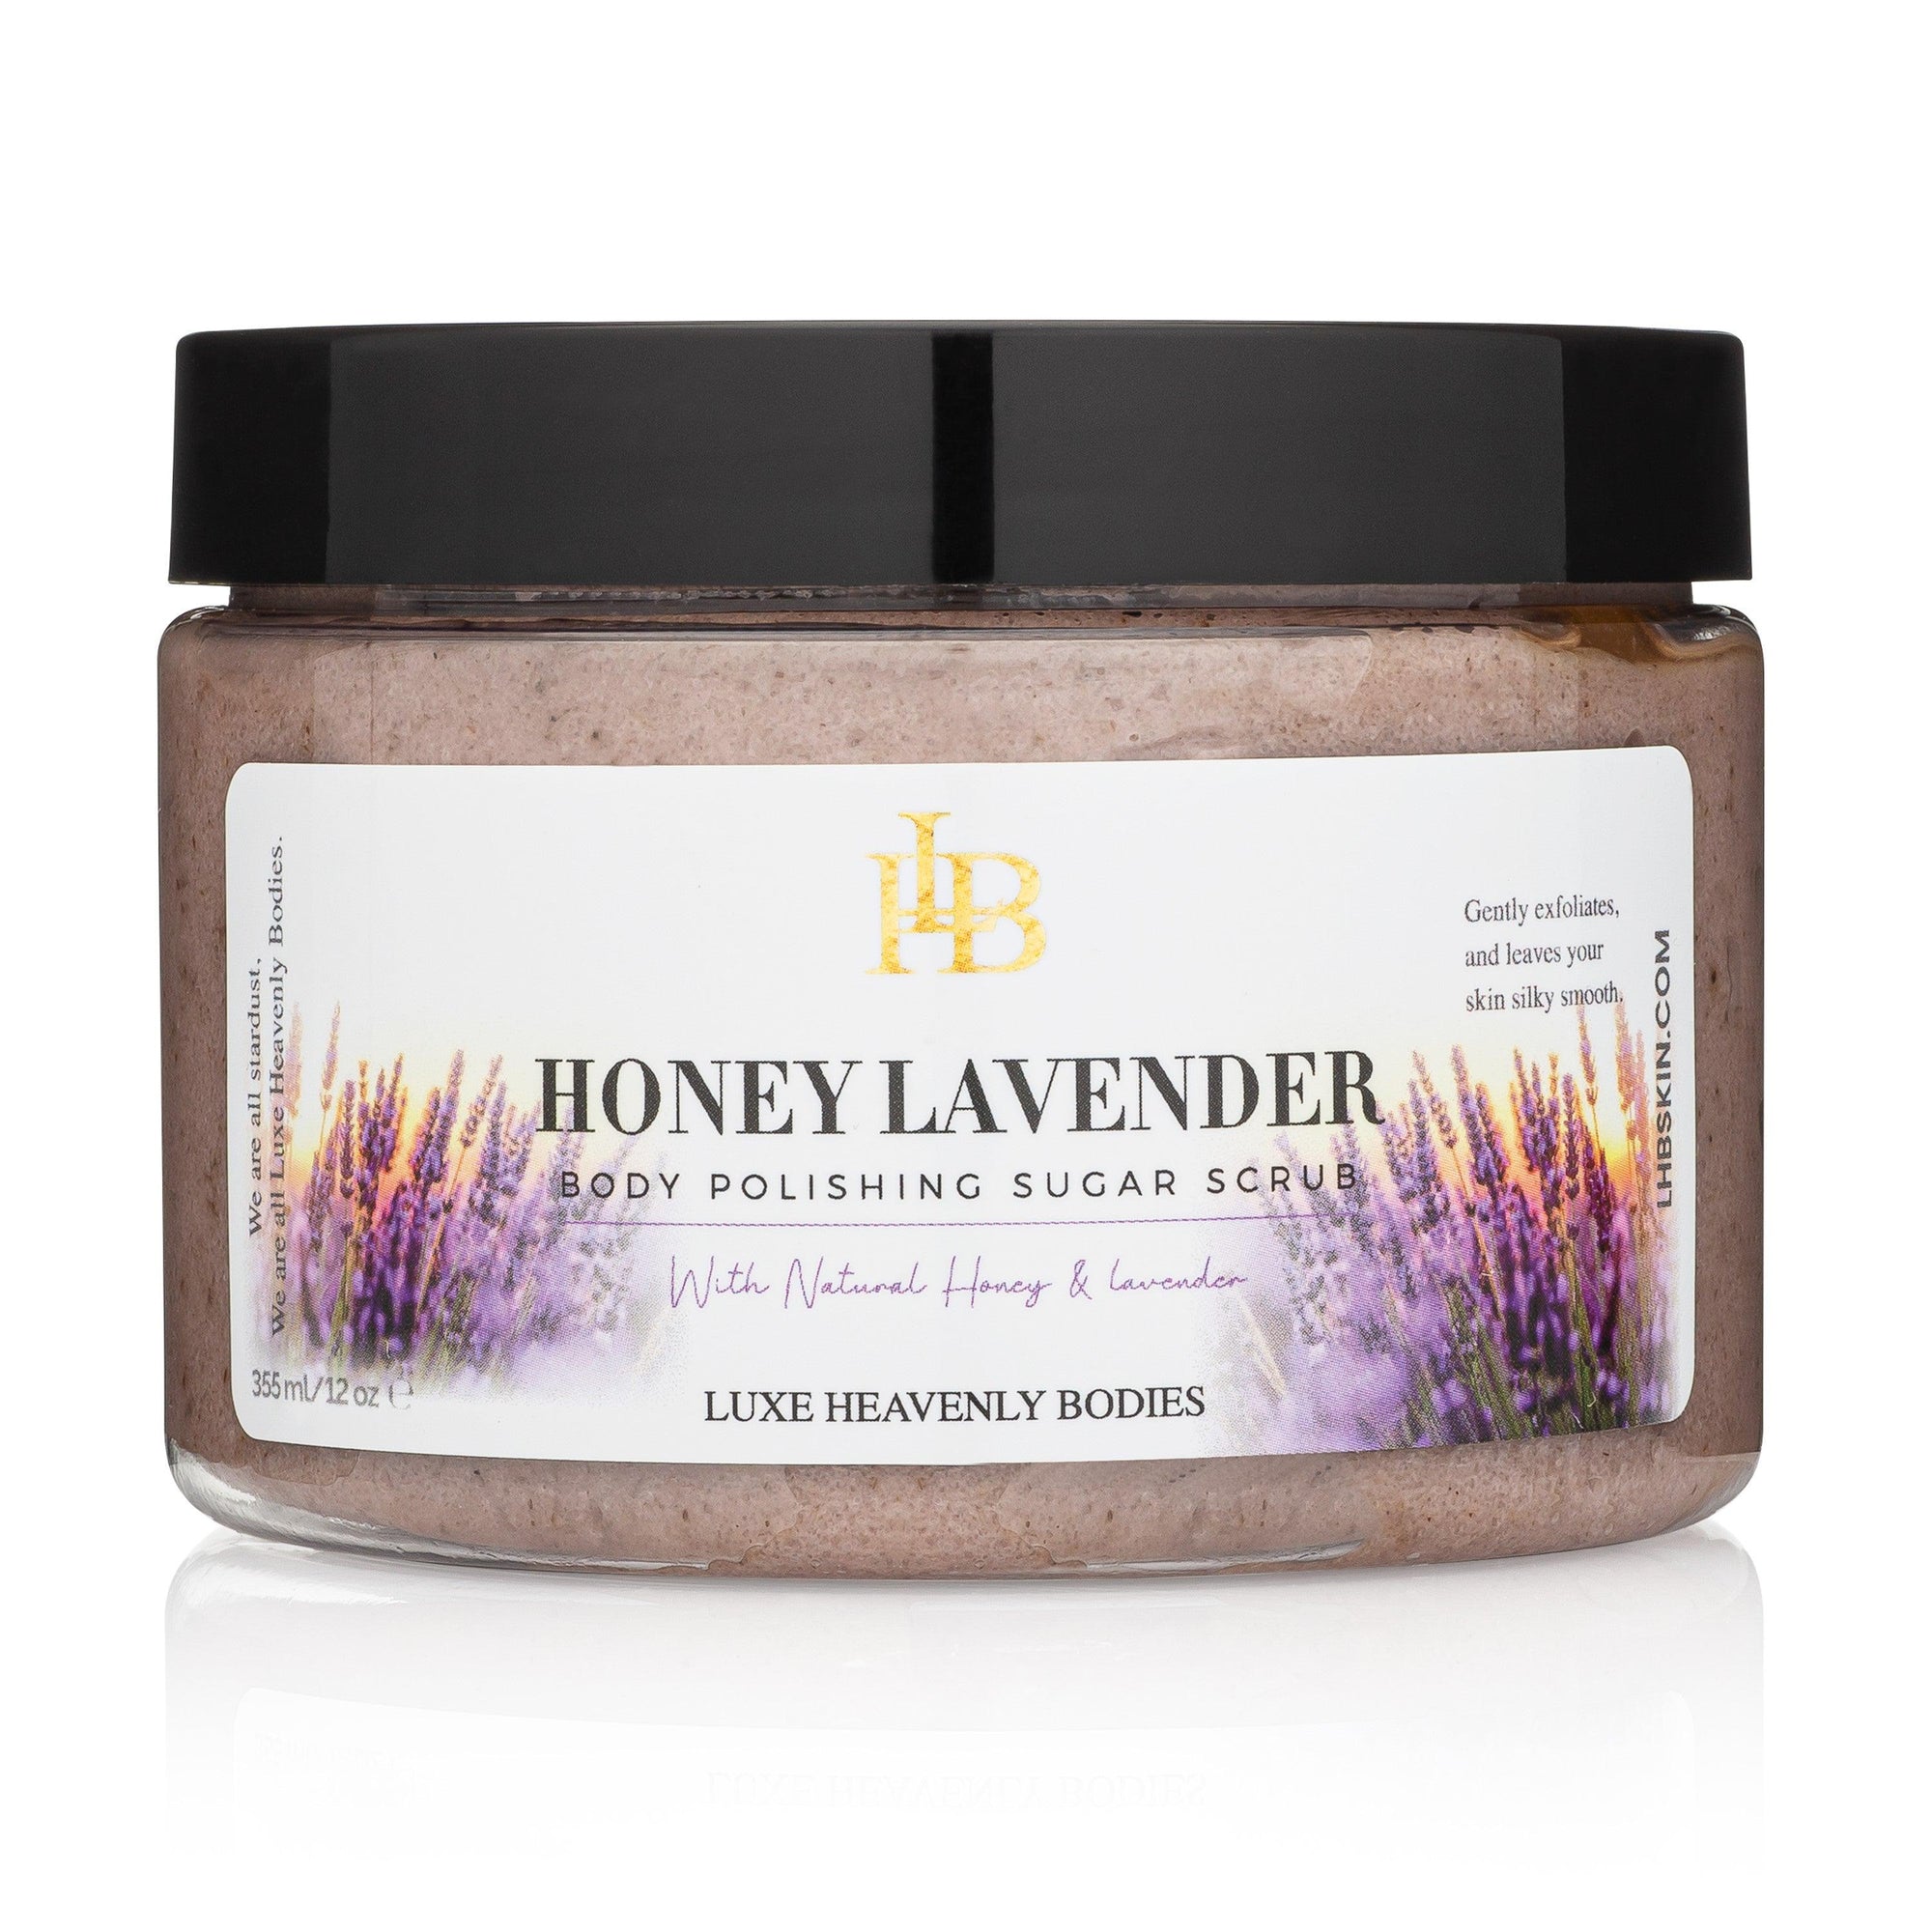 Honey Lavender Body Polishing Sugar Scrub - LUXE Heavenly Bodies